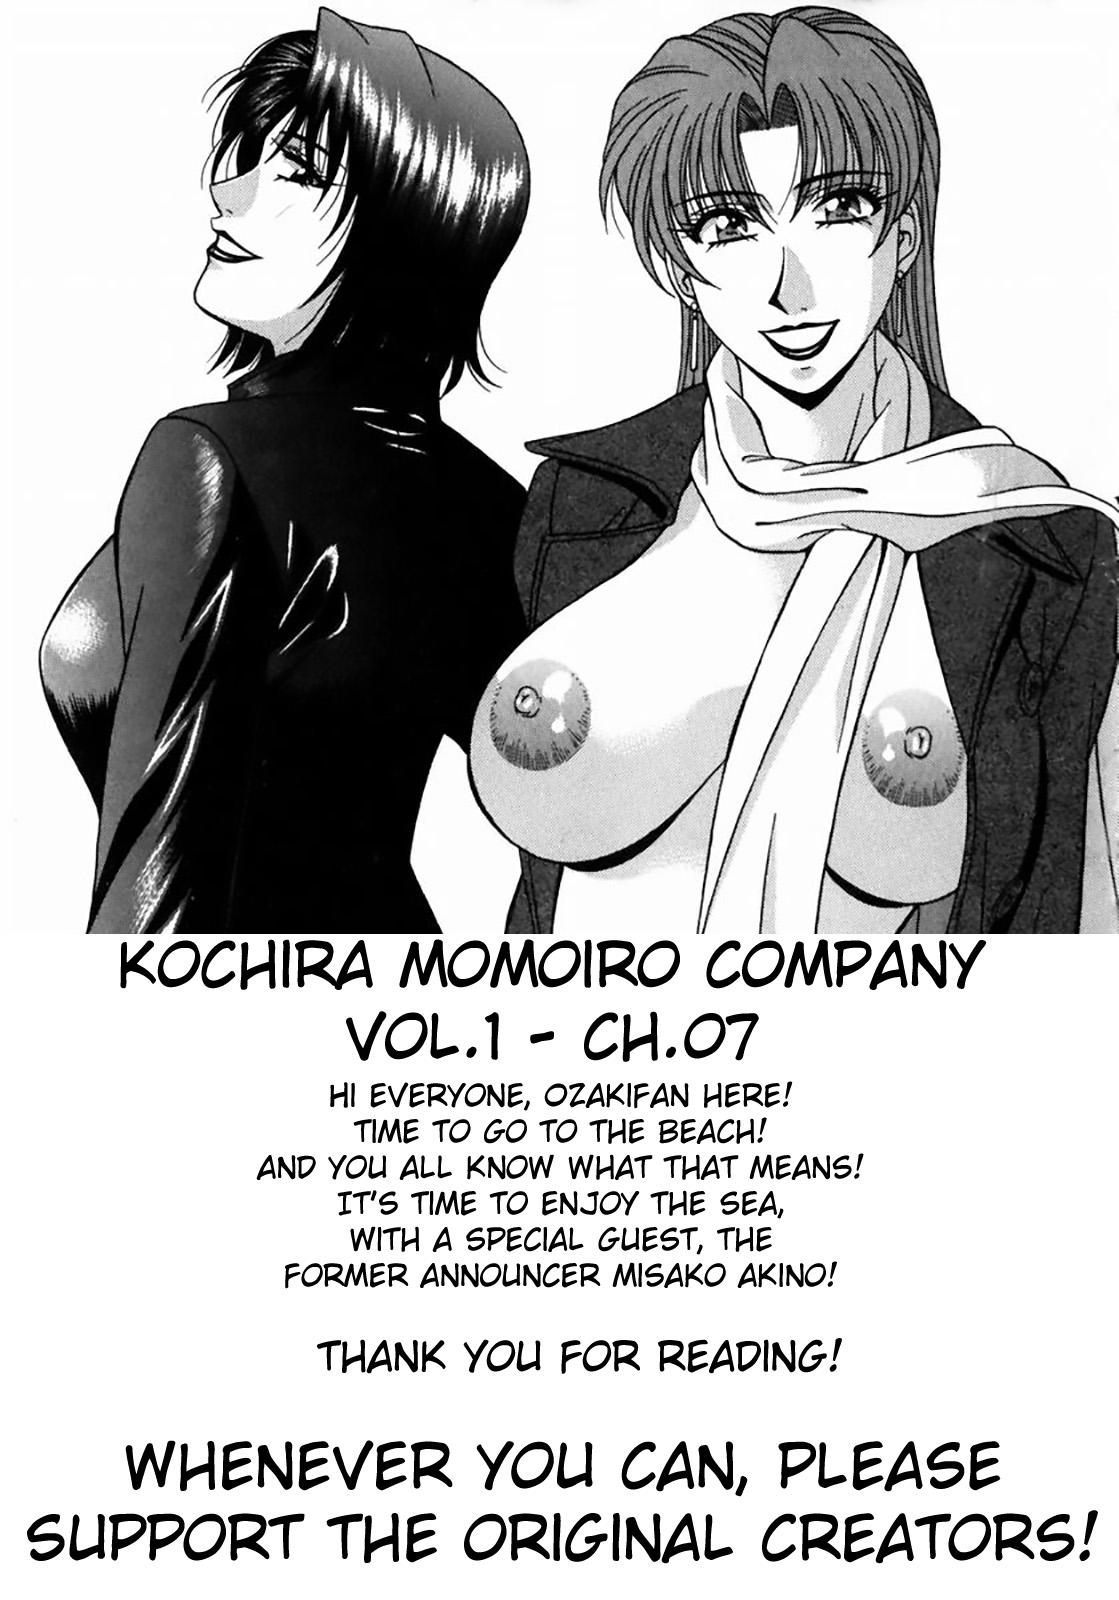 Caught Kochira Momoiro Company Vol. 1 Ch. 1-7 Roundass - Page 153